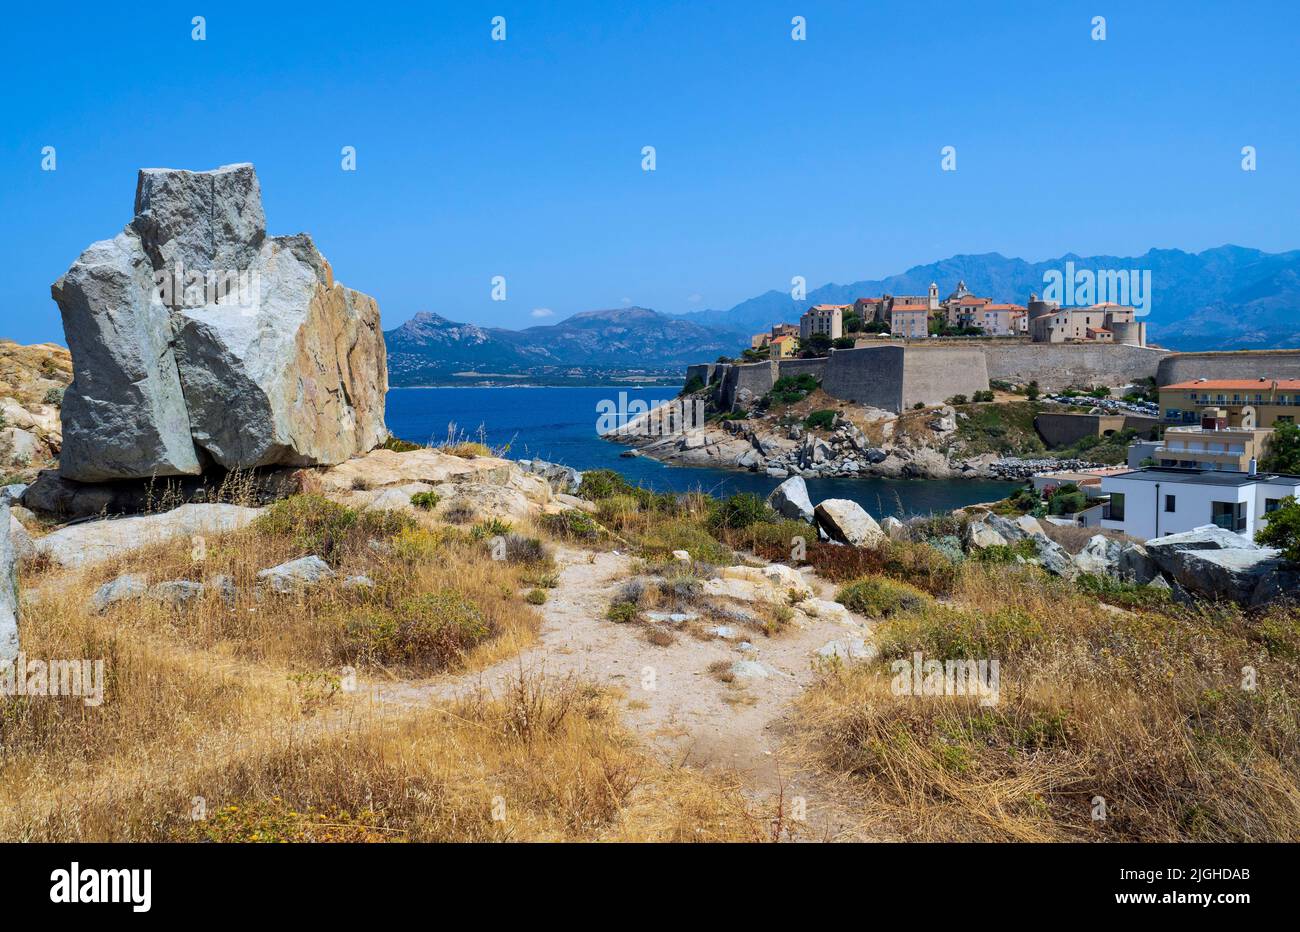 City of Calvi on the mediterranean island of Corsica Stock Photo